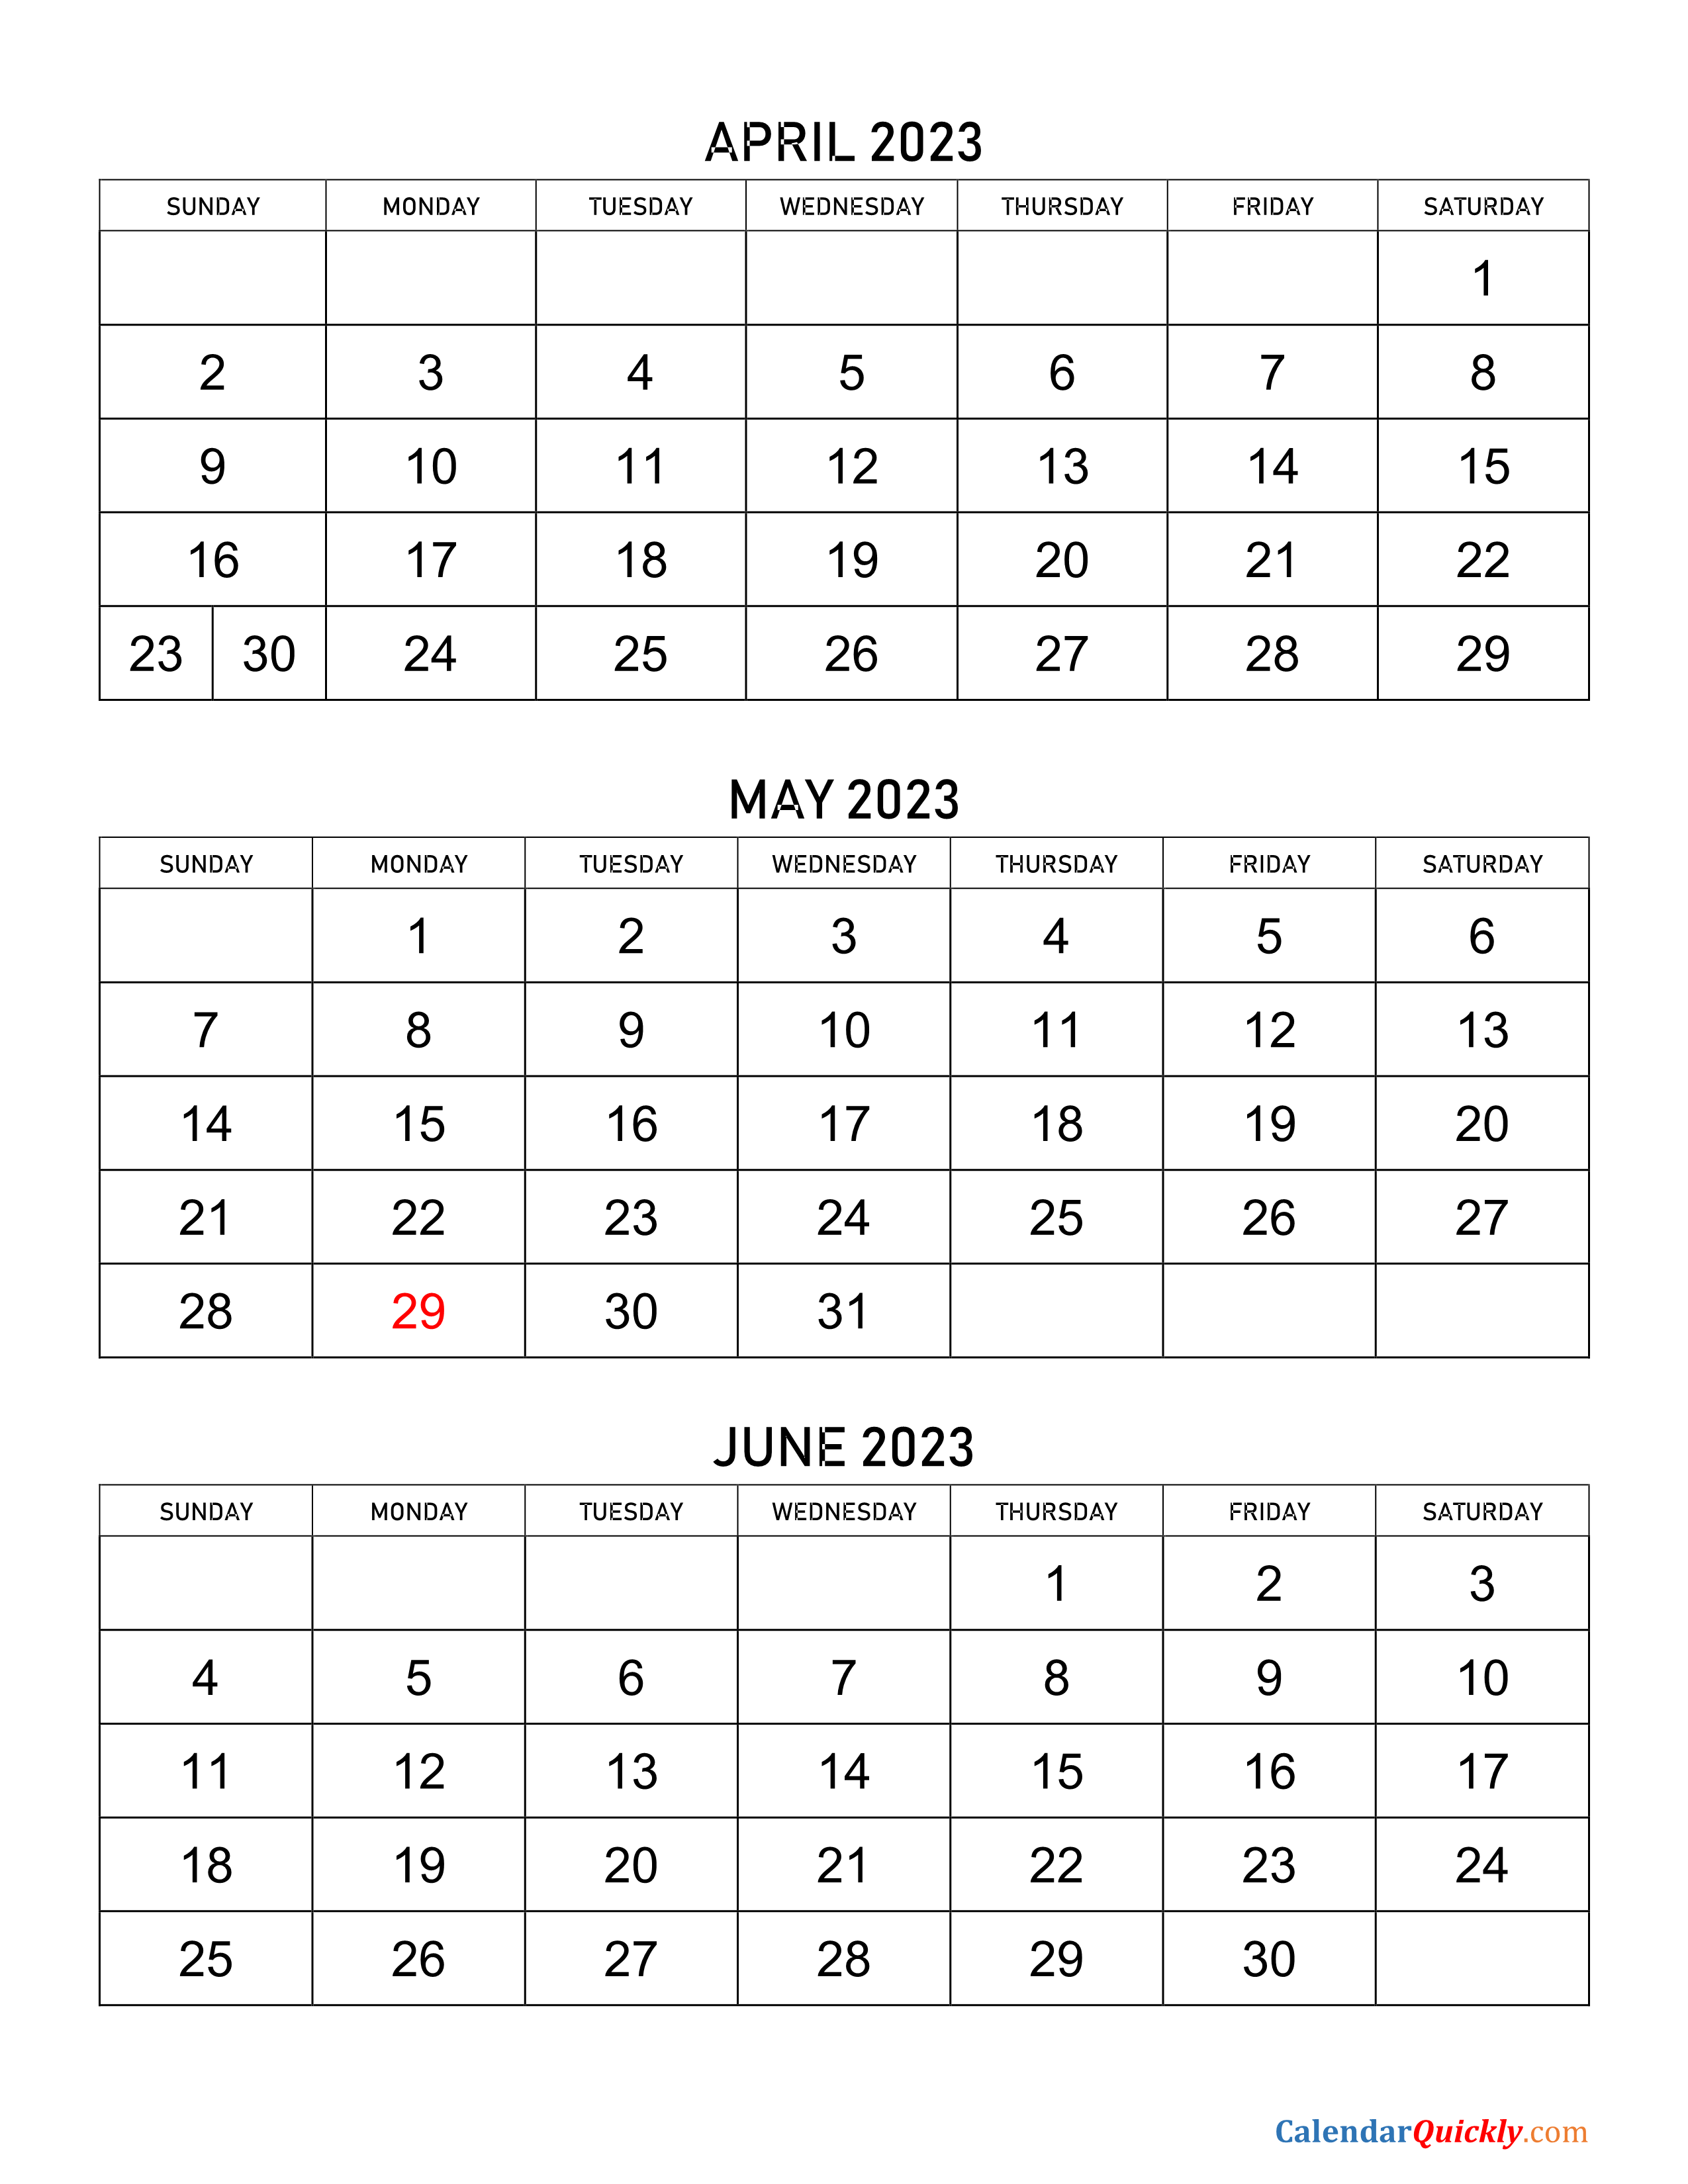 april-to-june-2023-calendar-calendar-quickly